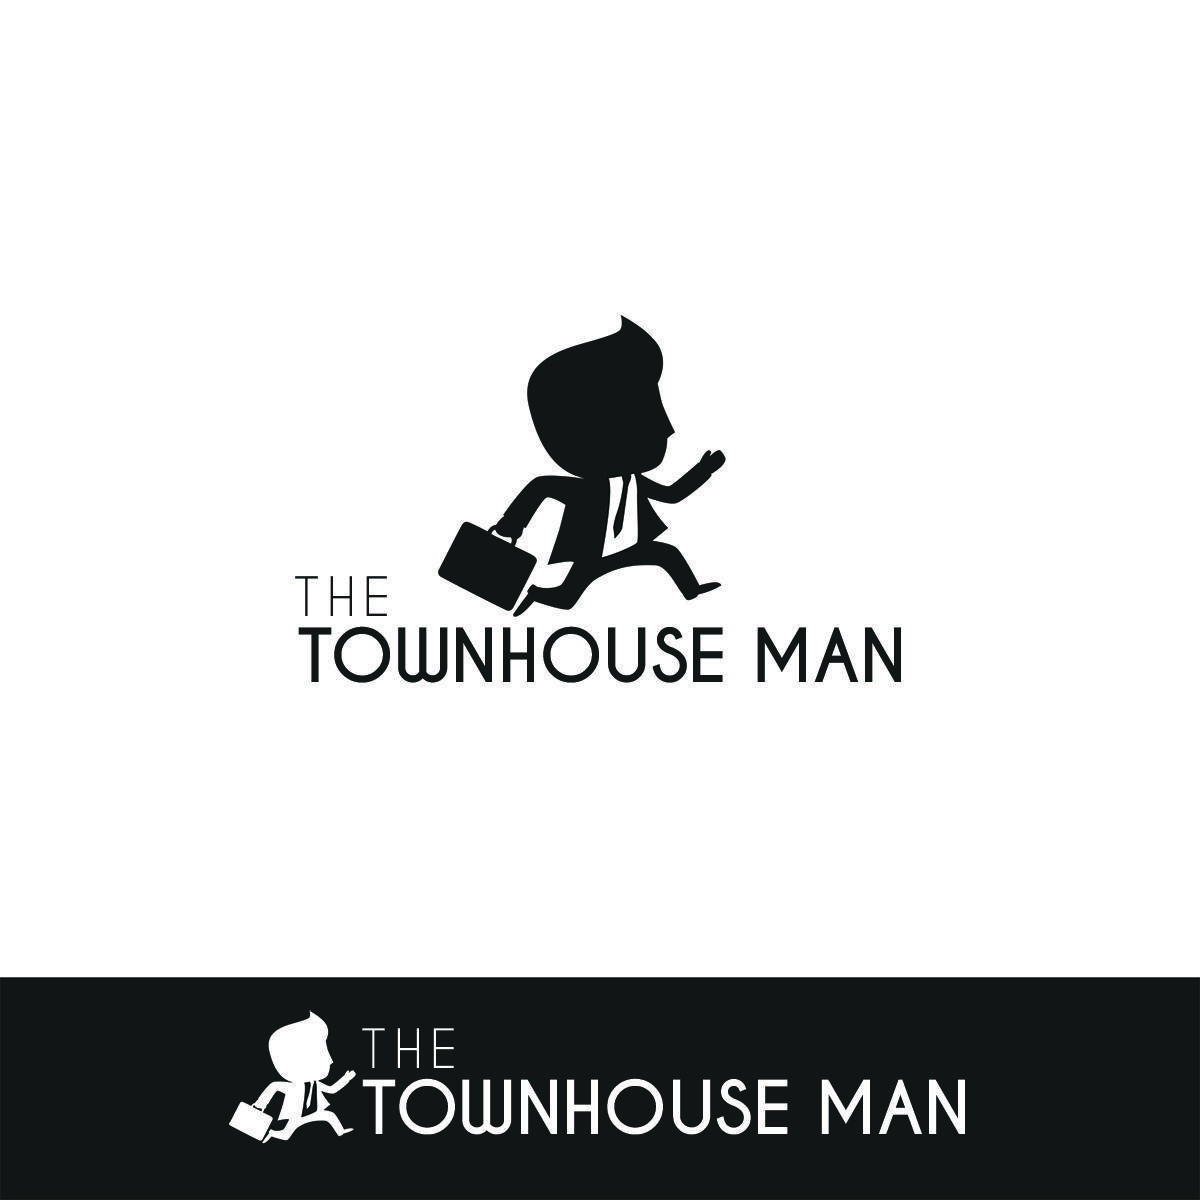 Townhouse Logo - Professional, Masculine, Real Estate Agent Logo Design for